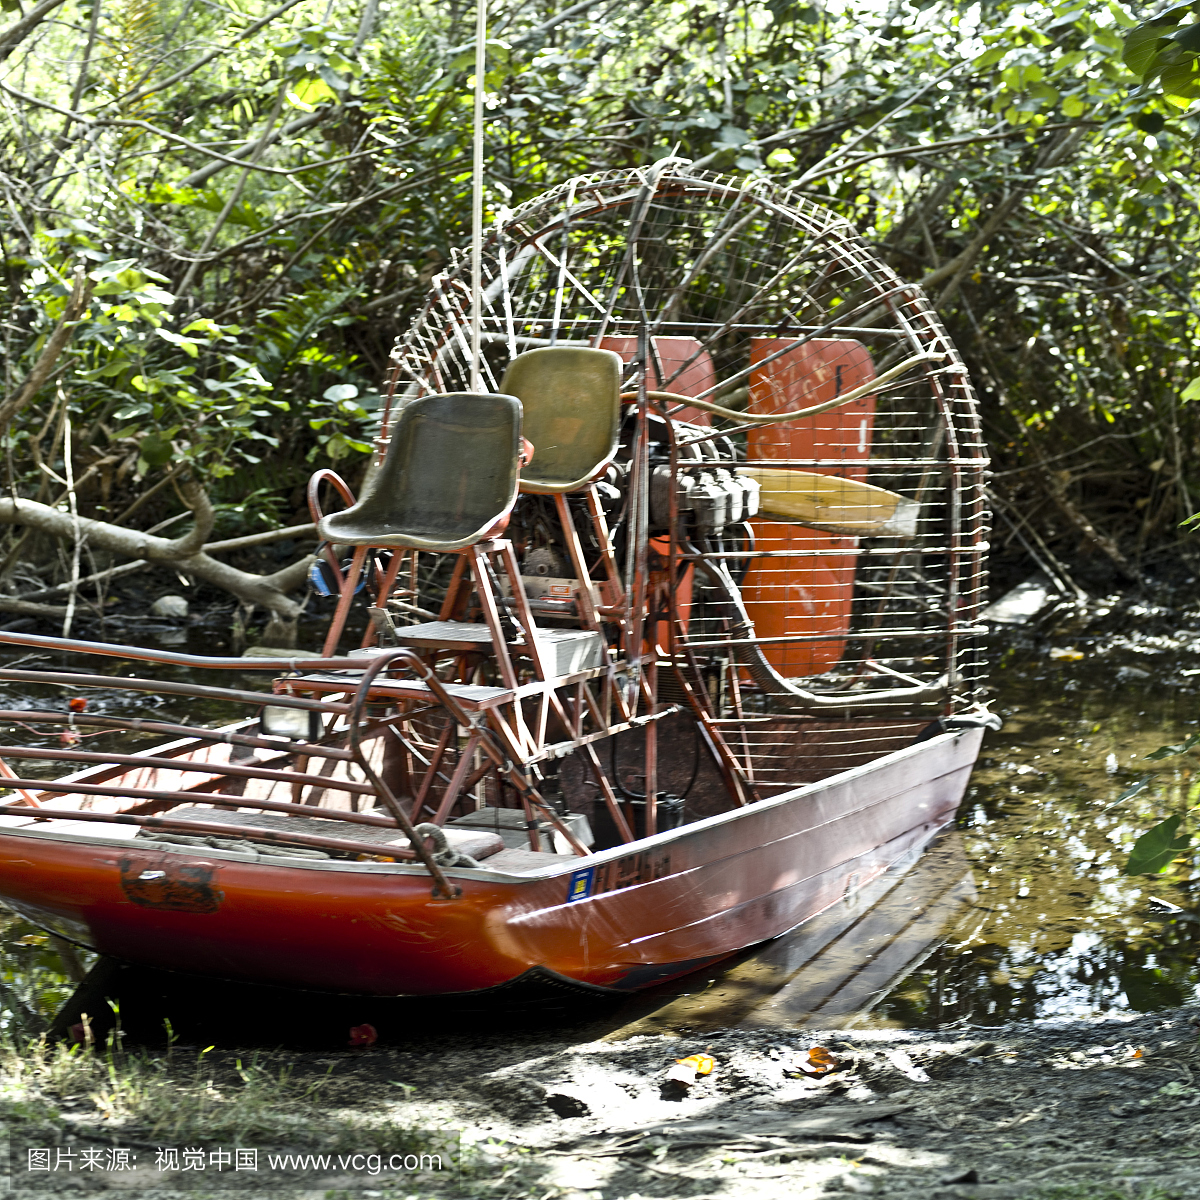 Sumpfboot在大沼泽地